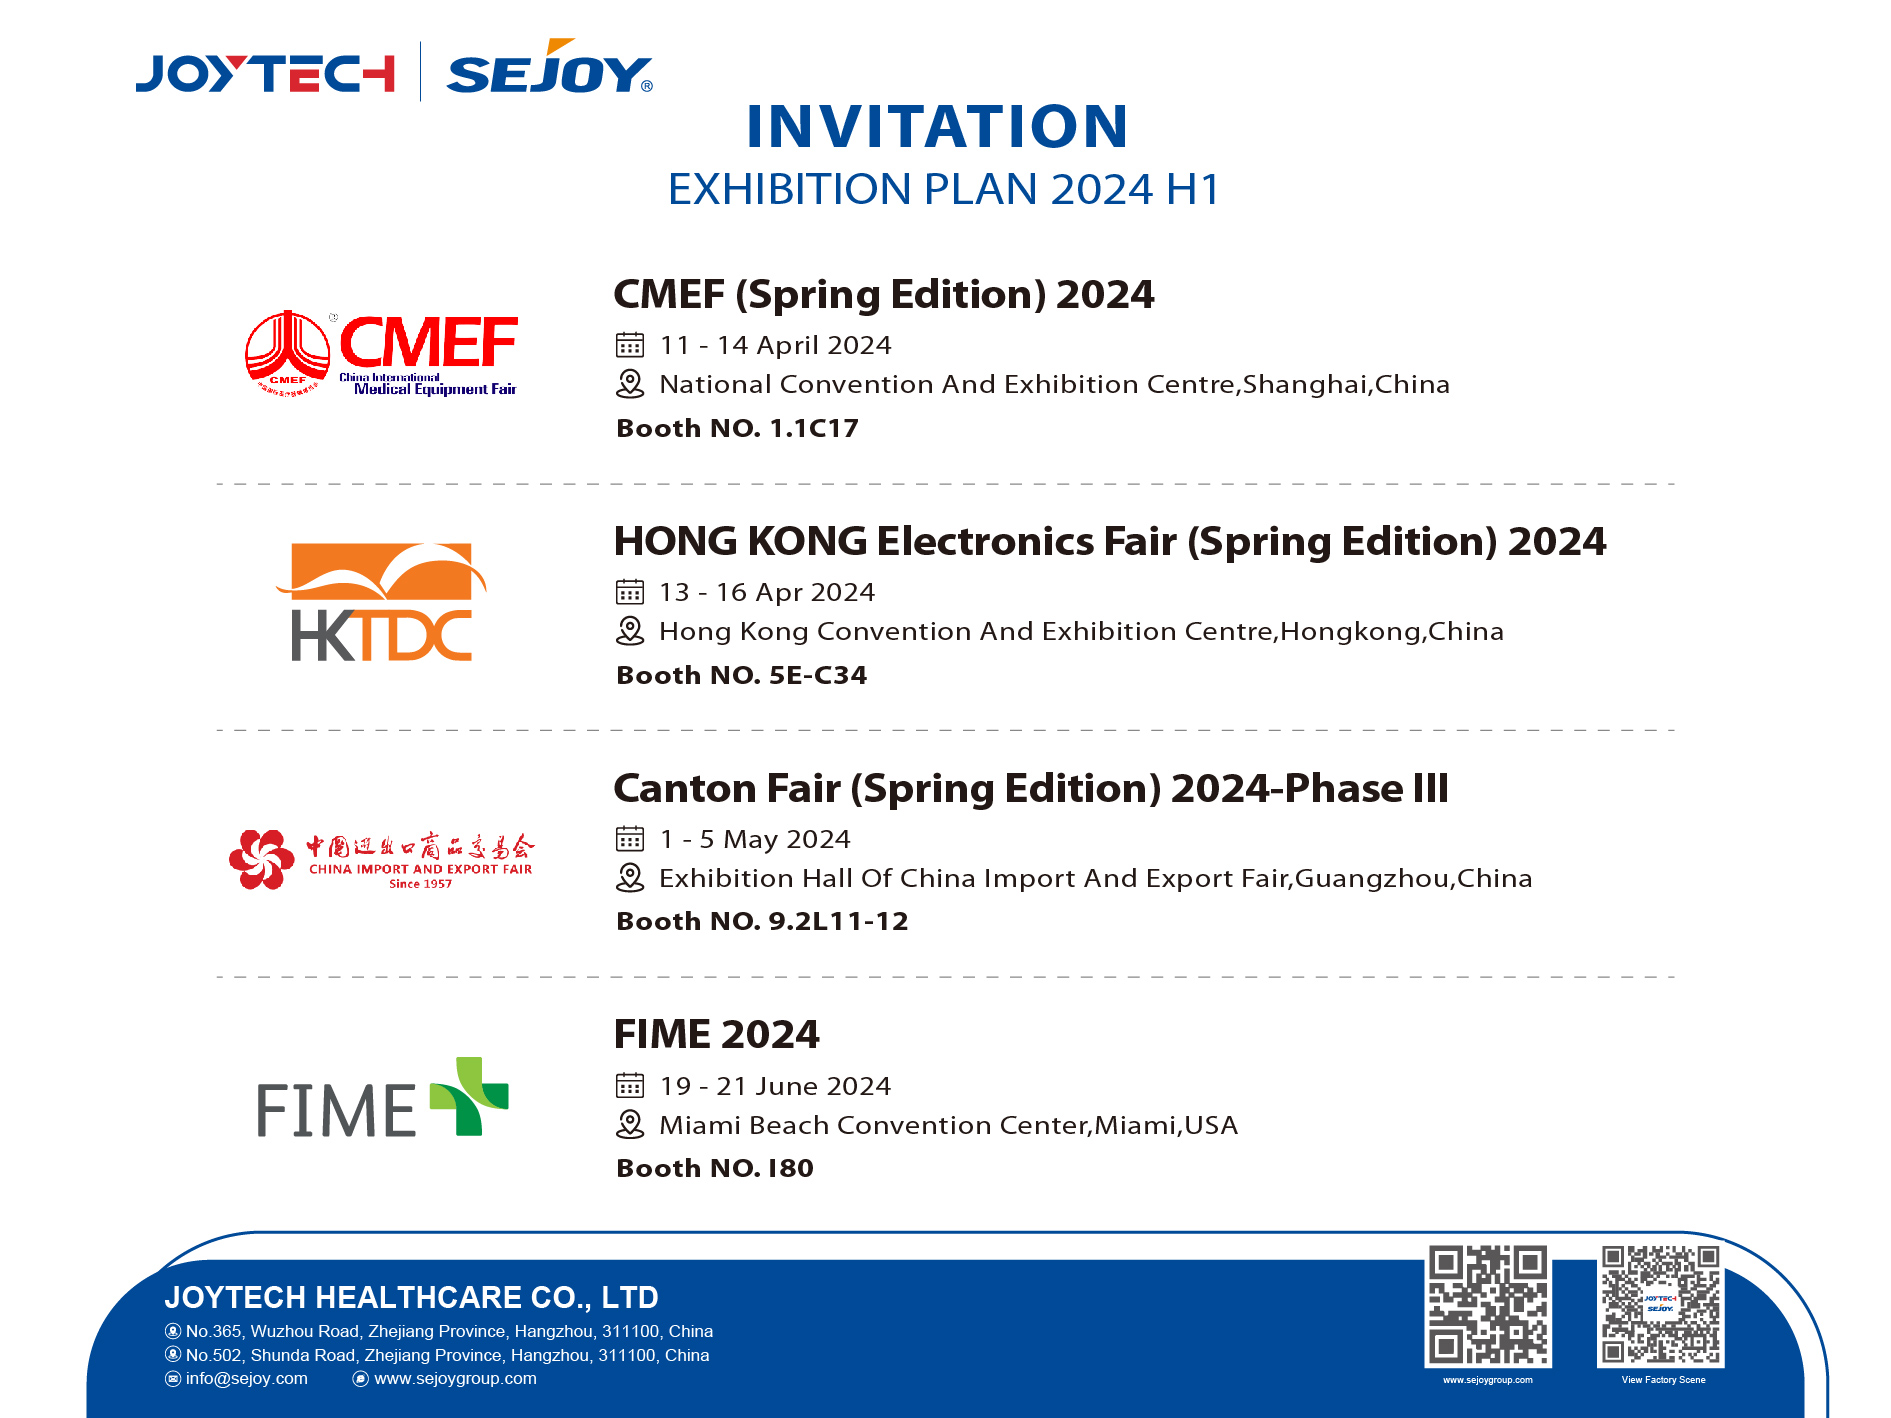 I-Joytech Exhibition Plan 2024 H1